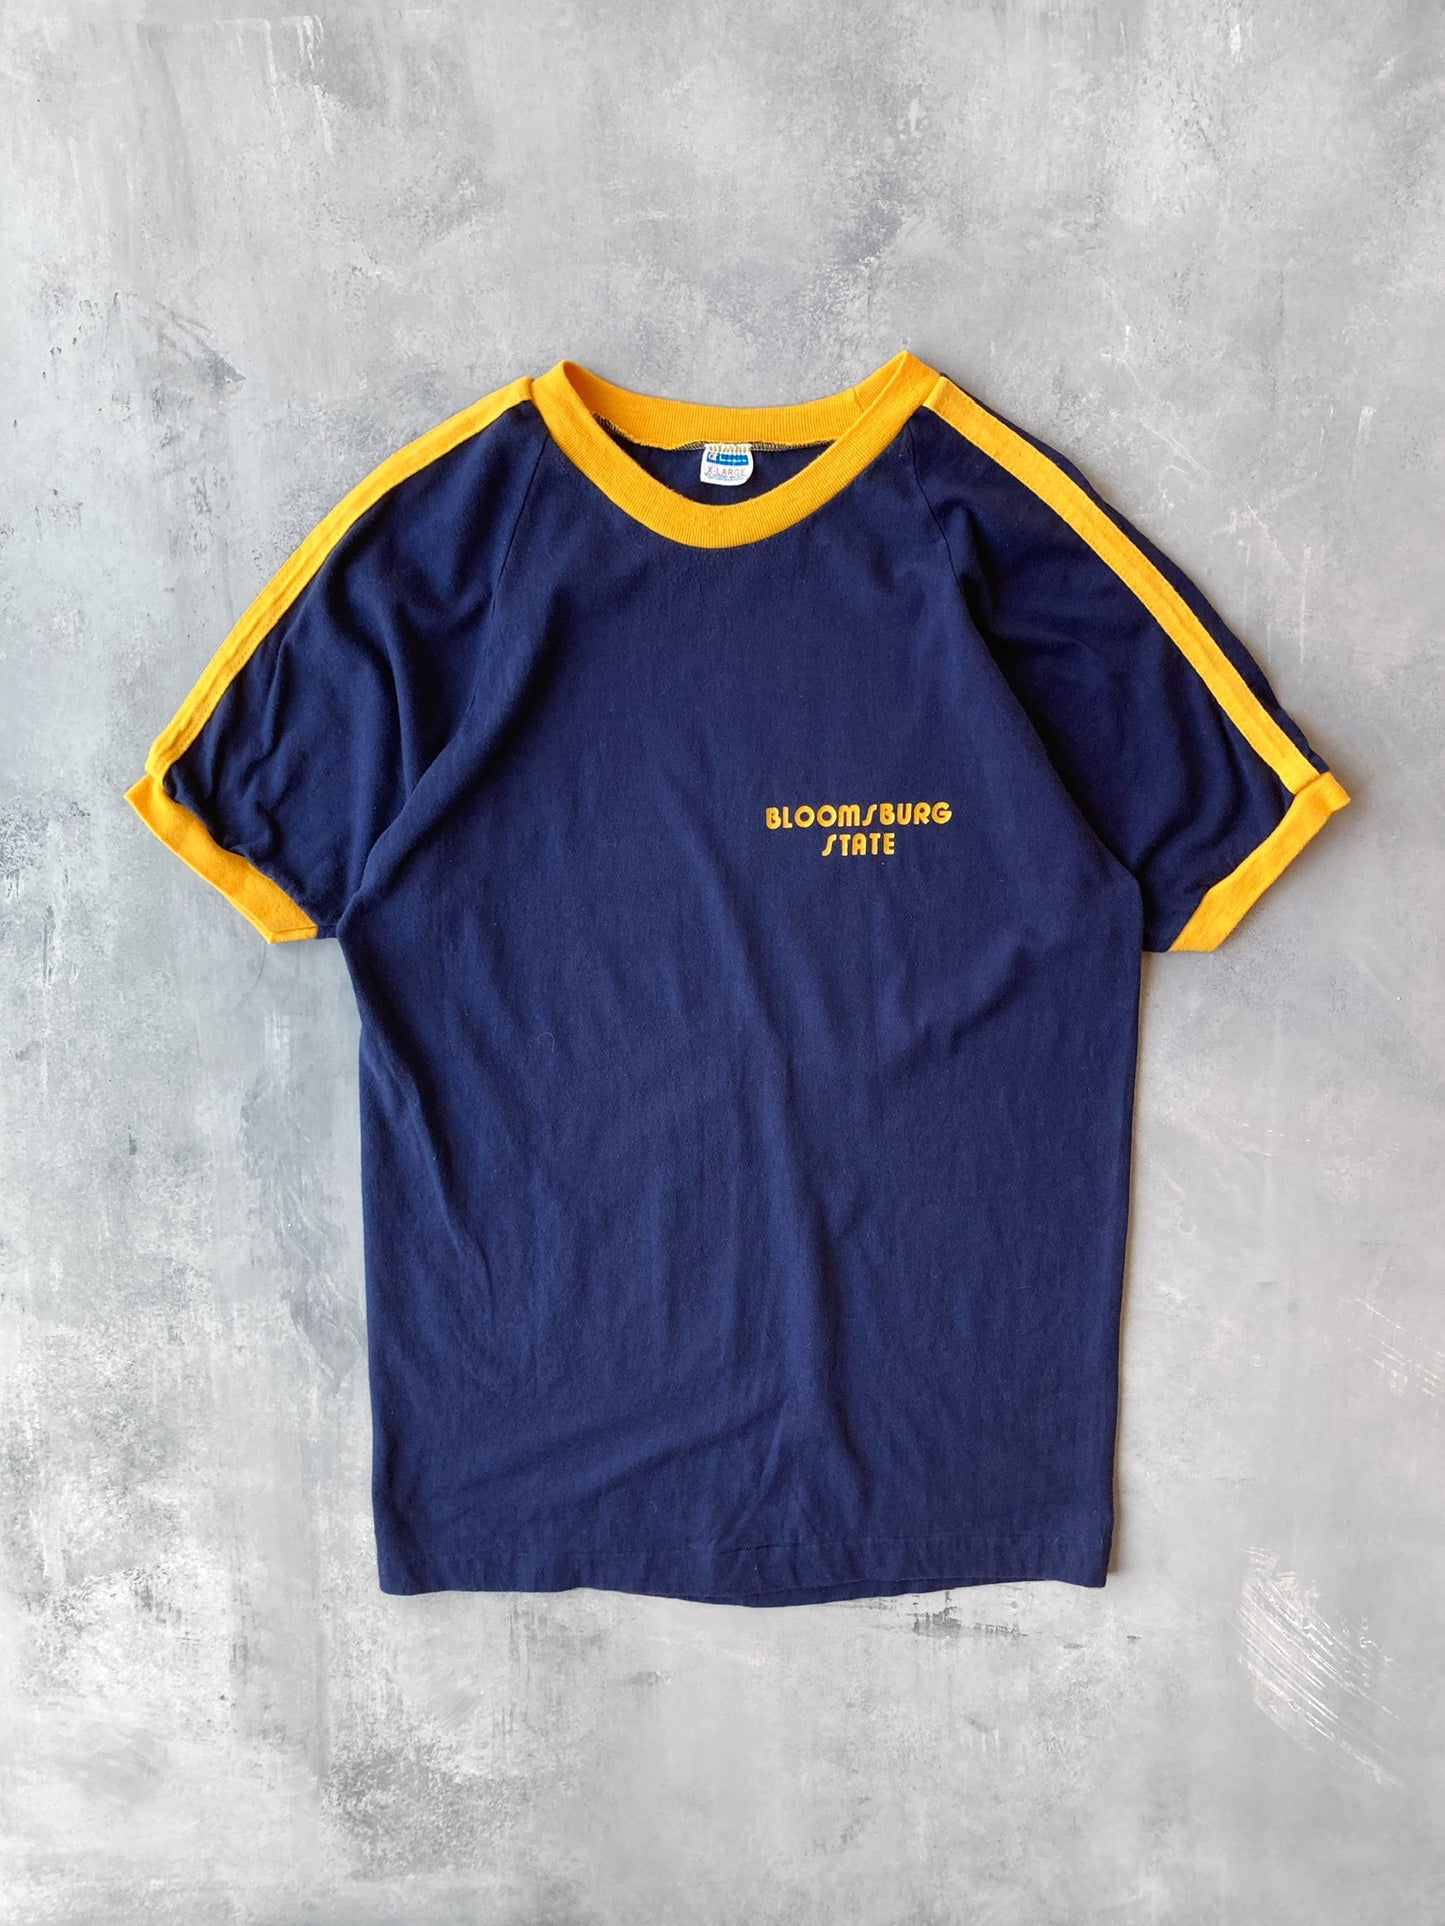 Bloomsburg State T-Shirt 70's - Medium